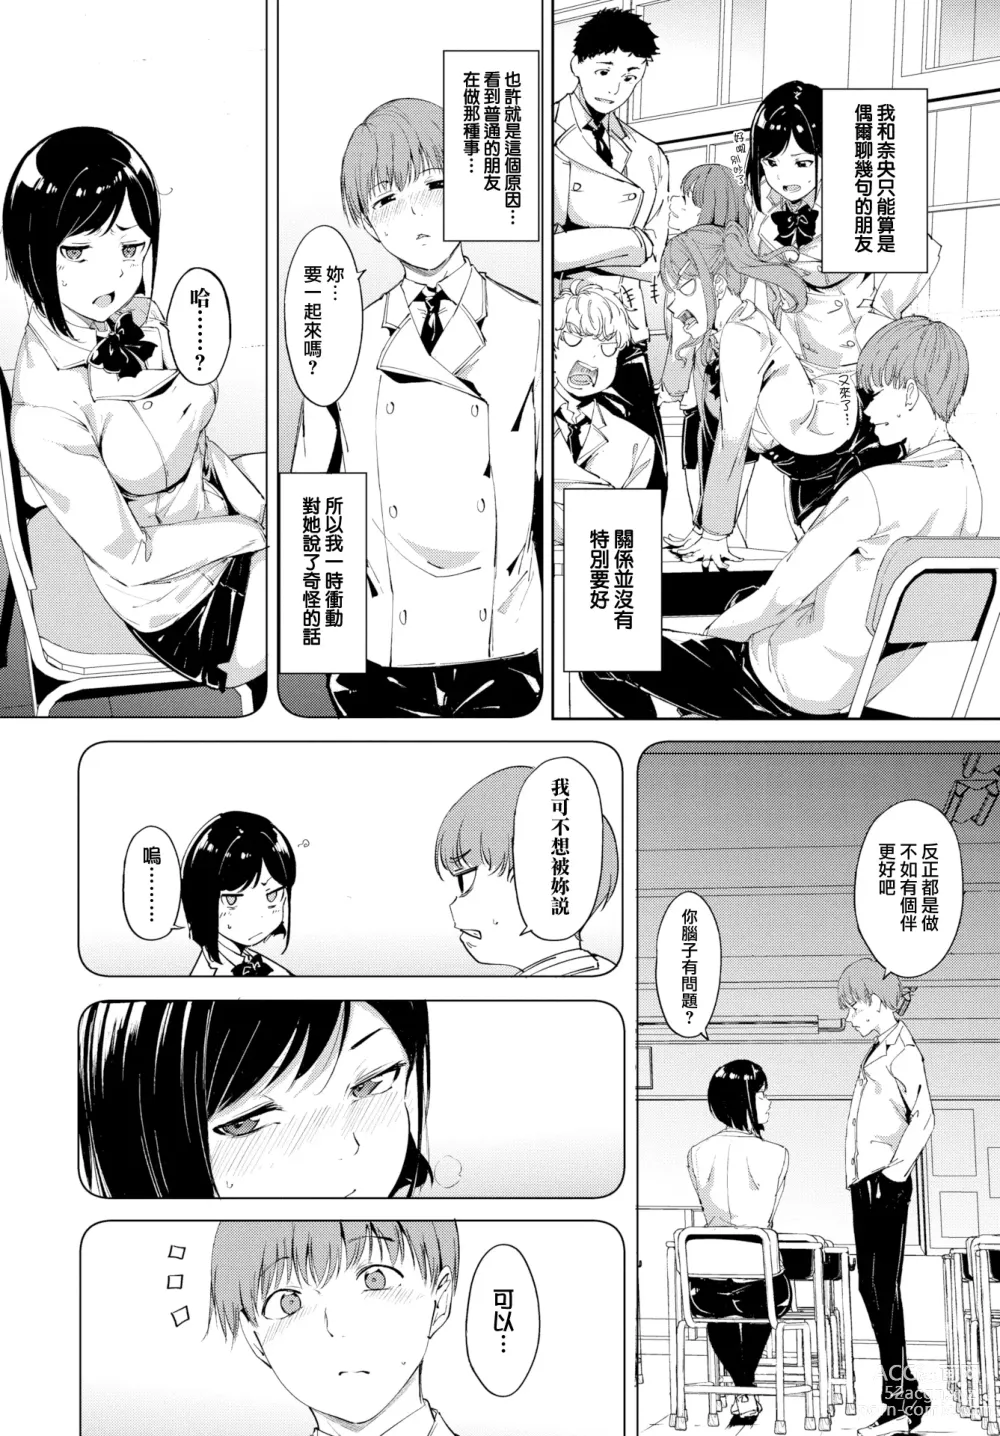 Page 6 of doujinshi Routine 1+1.5